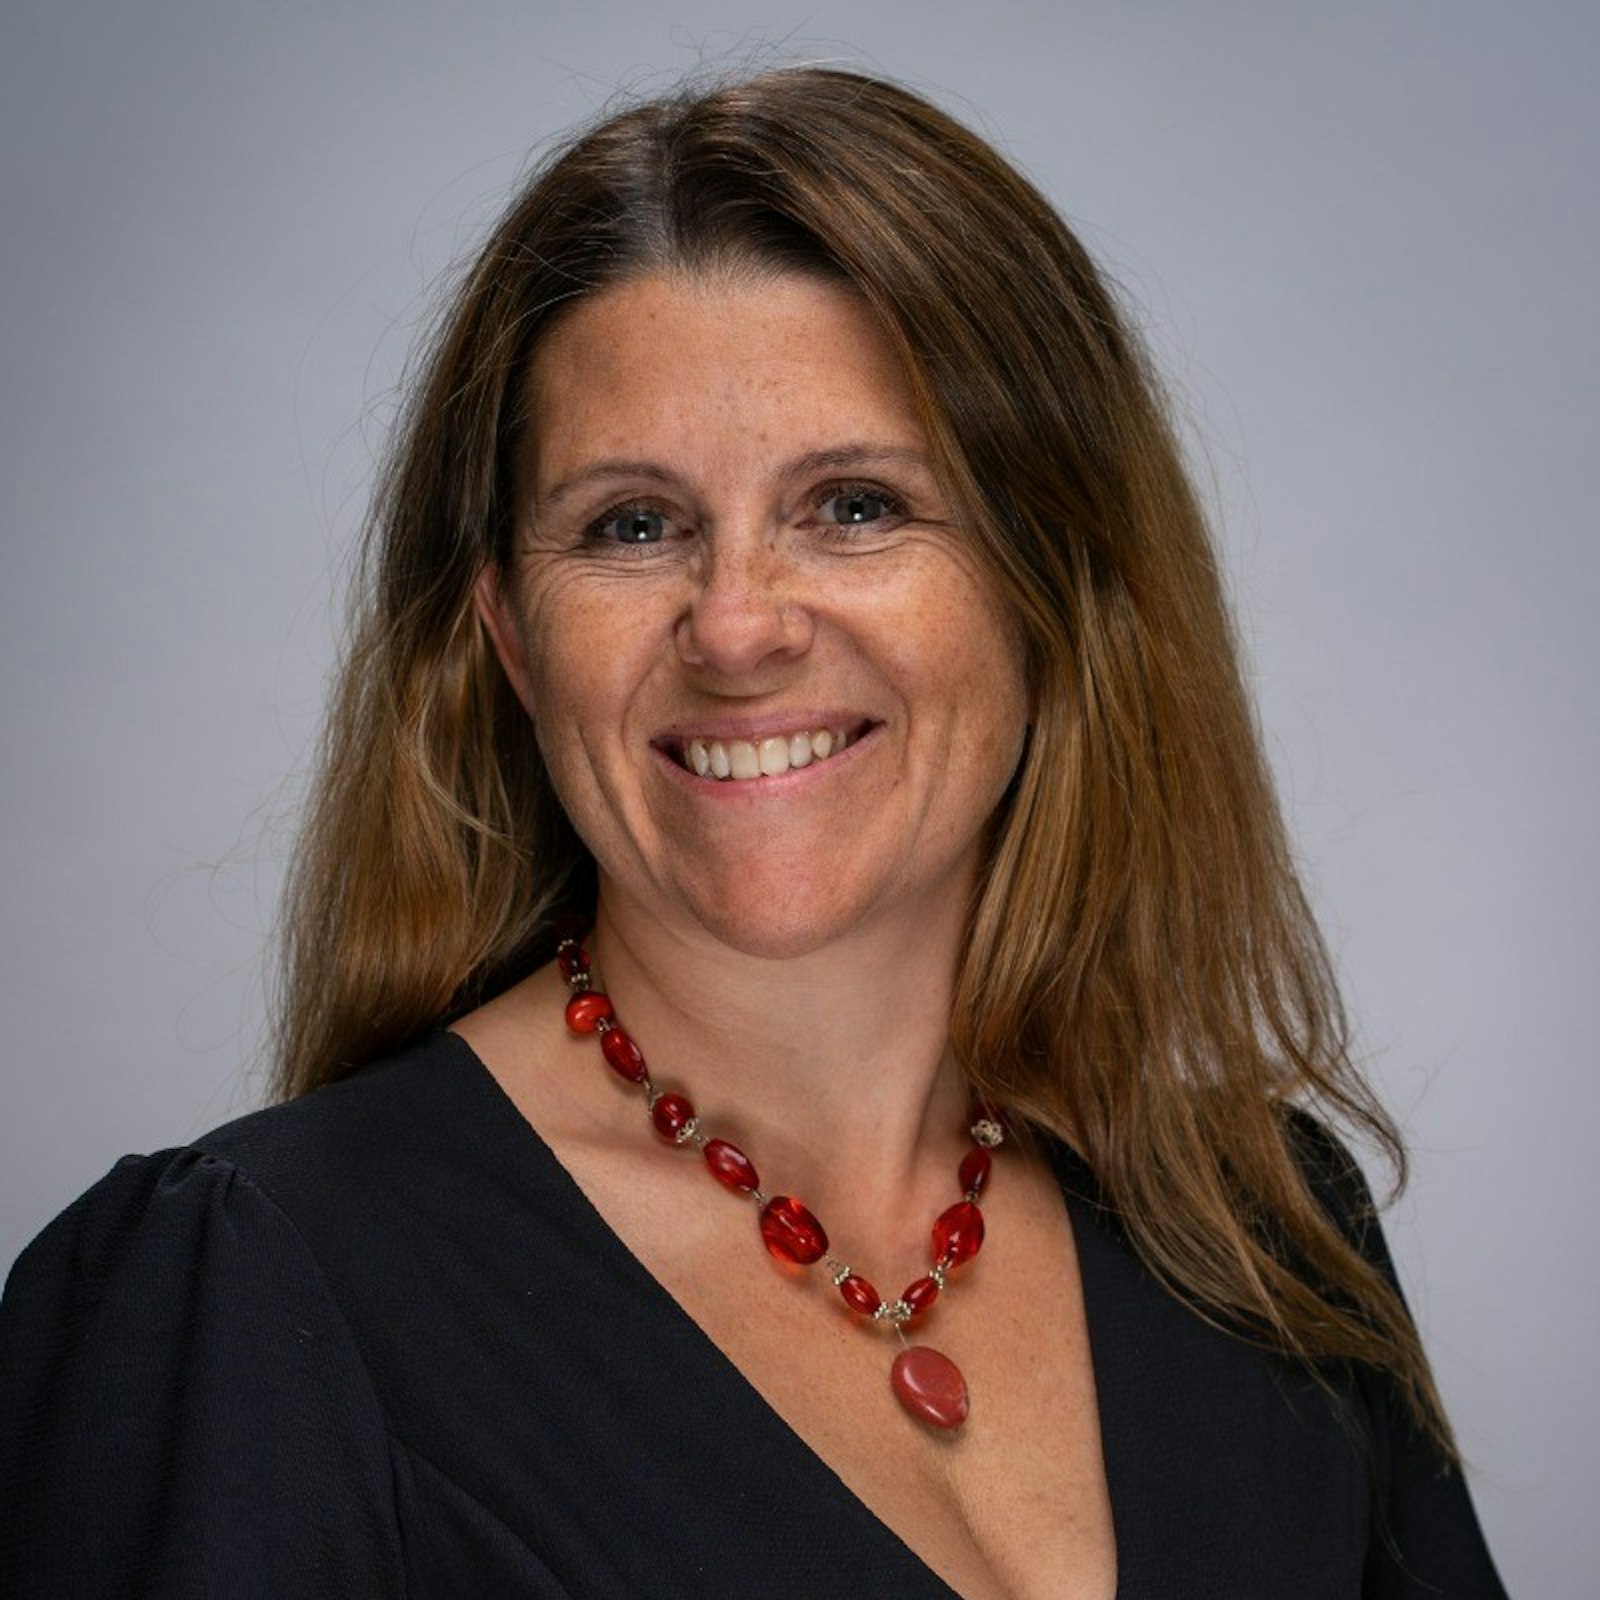 Beverley Bartlett, Head of Digital Care at Vodafone